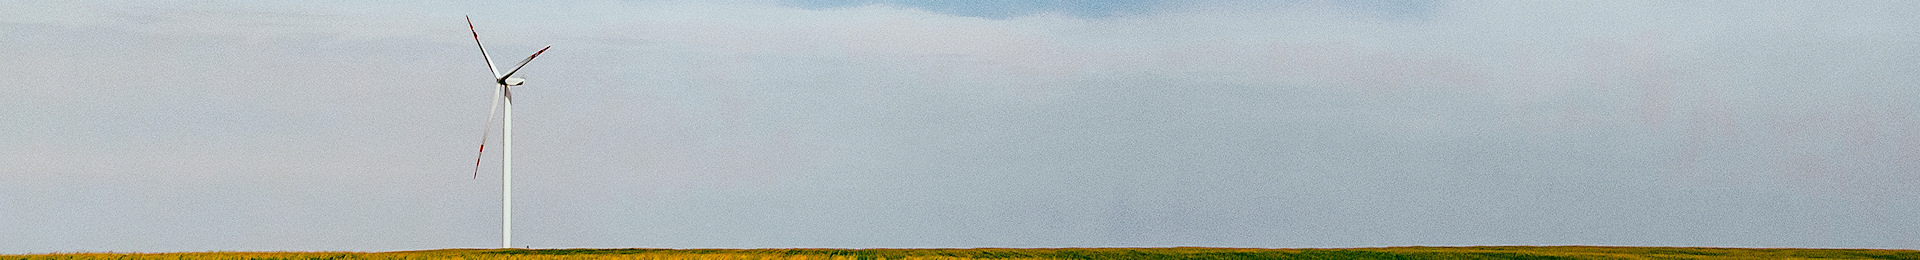 Photograph: Wind turbine in a field.